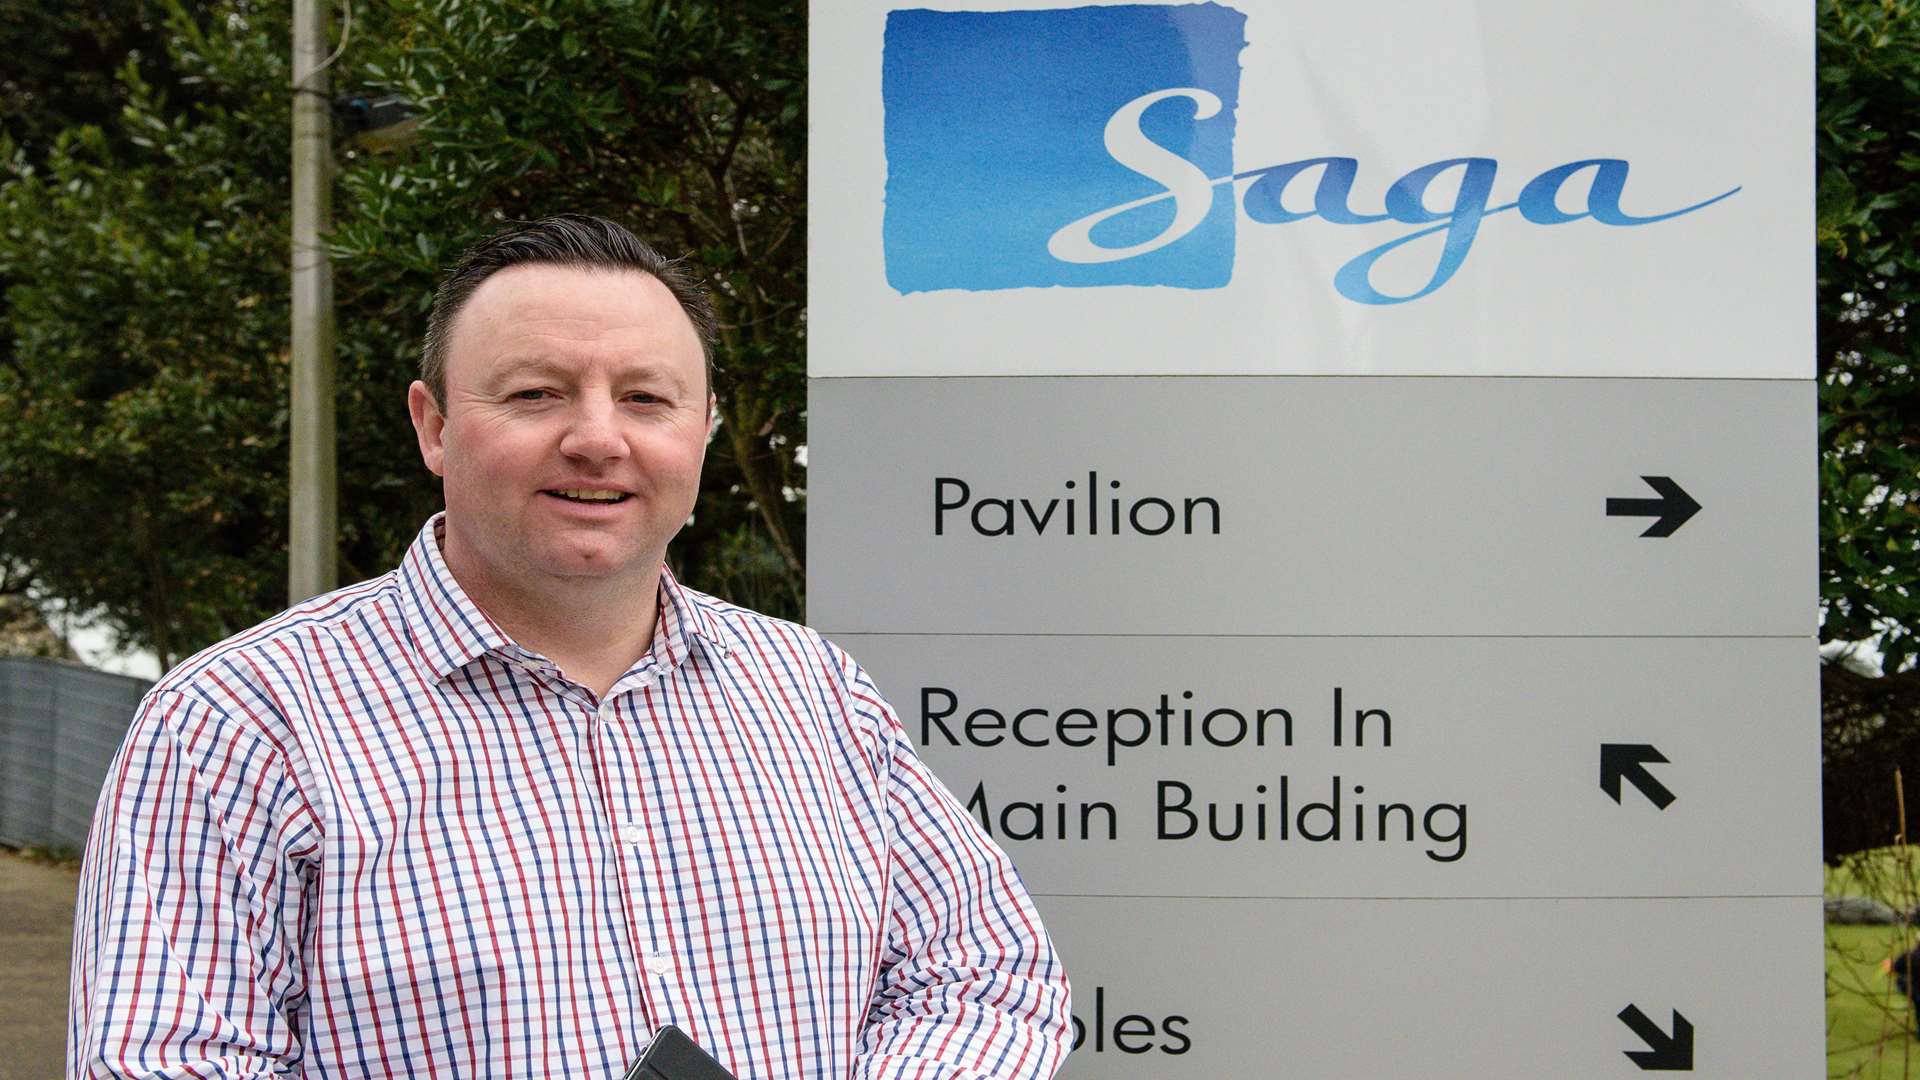 Saga social media manager David Knockton